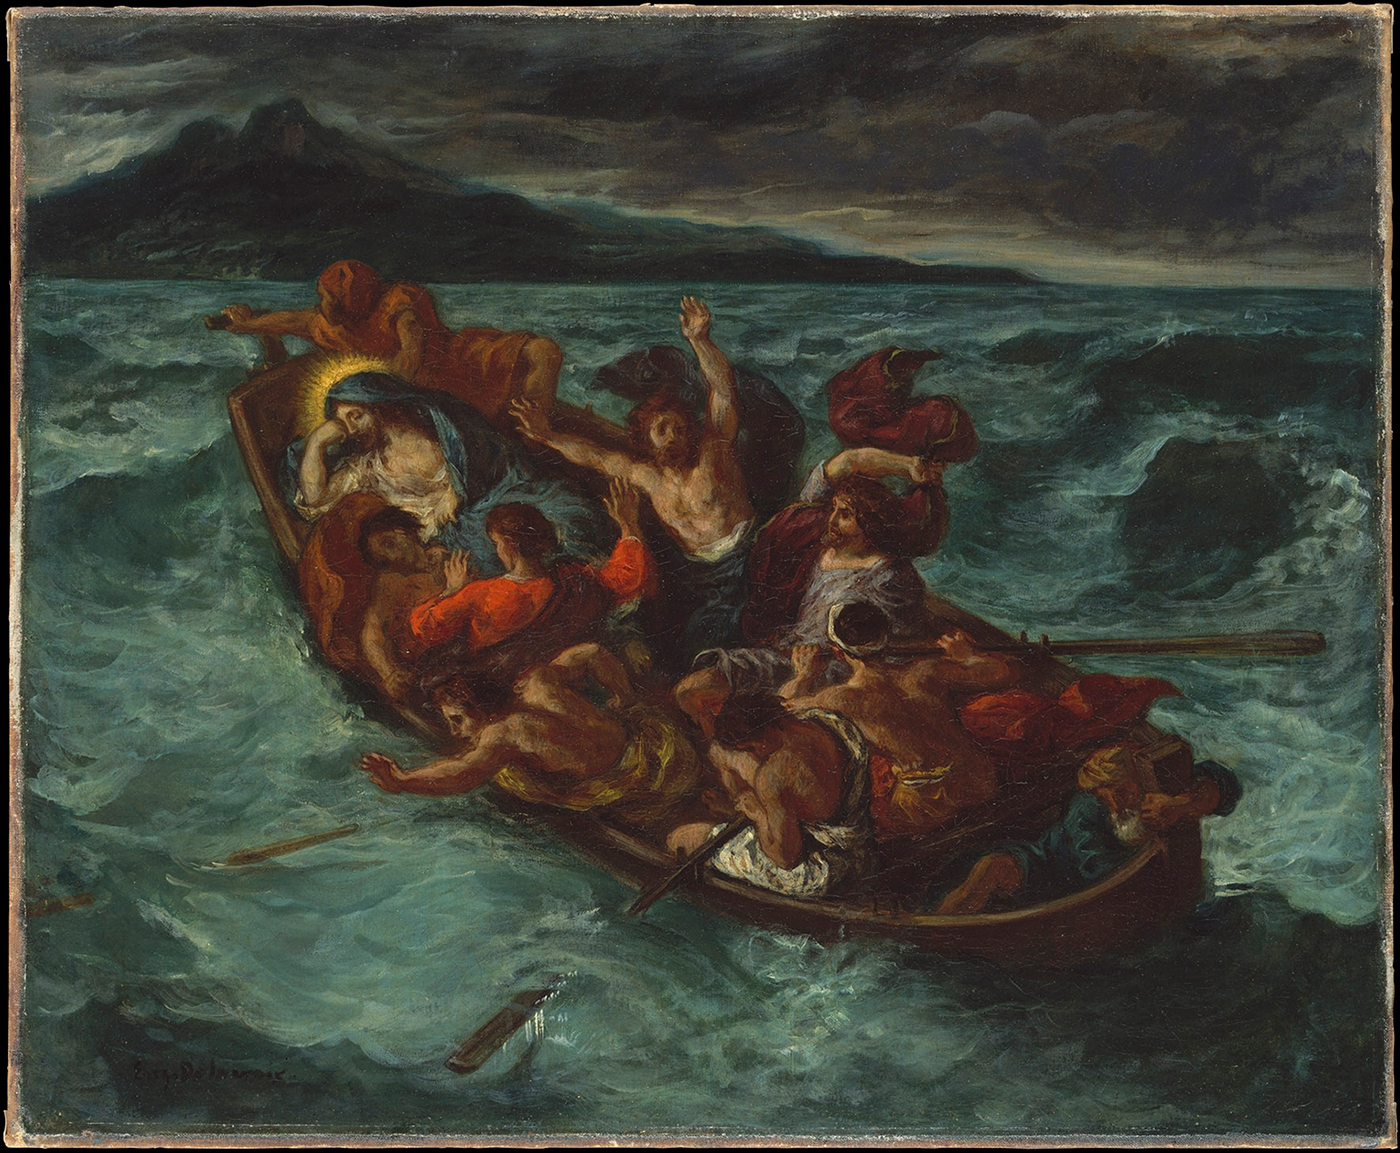 Delacroix: Quem Foi O Artista, Obras E Características